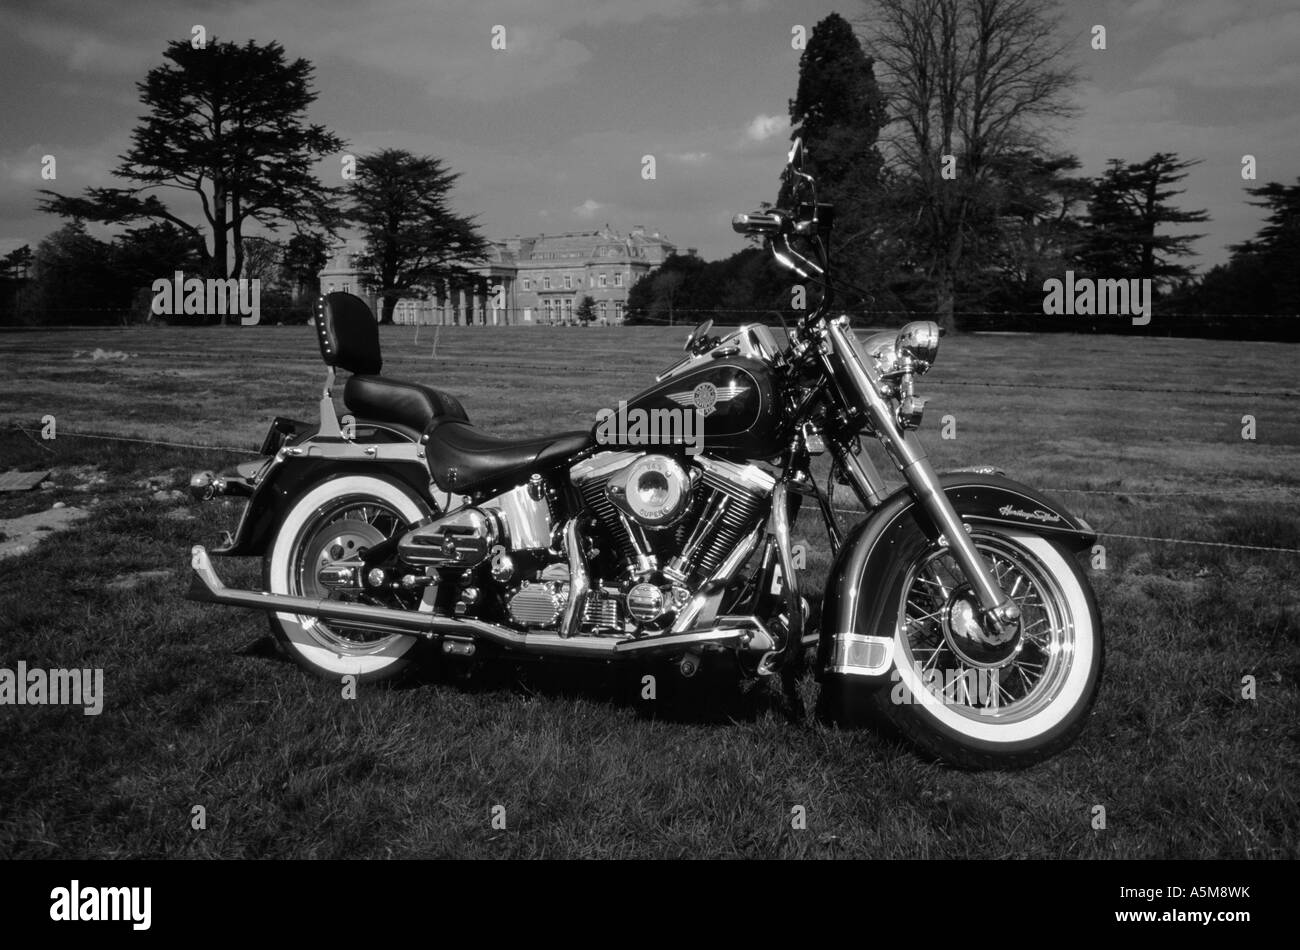 Harley Davidson Heritage Softail Nostalgia of 1995 Stock Photo